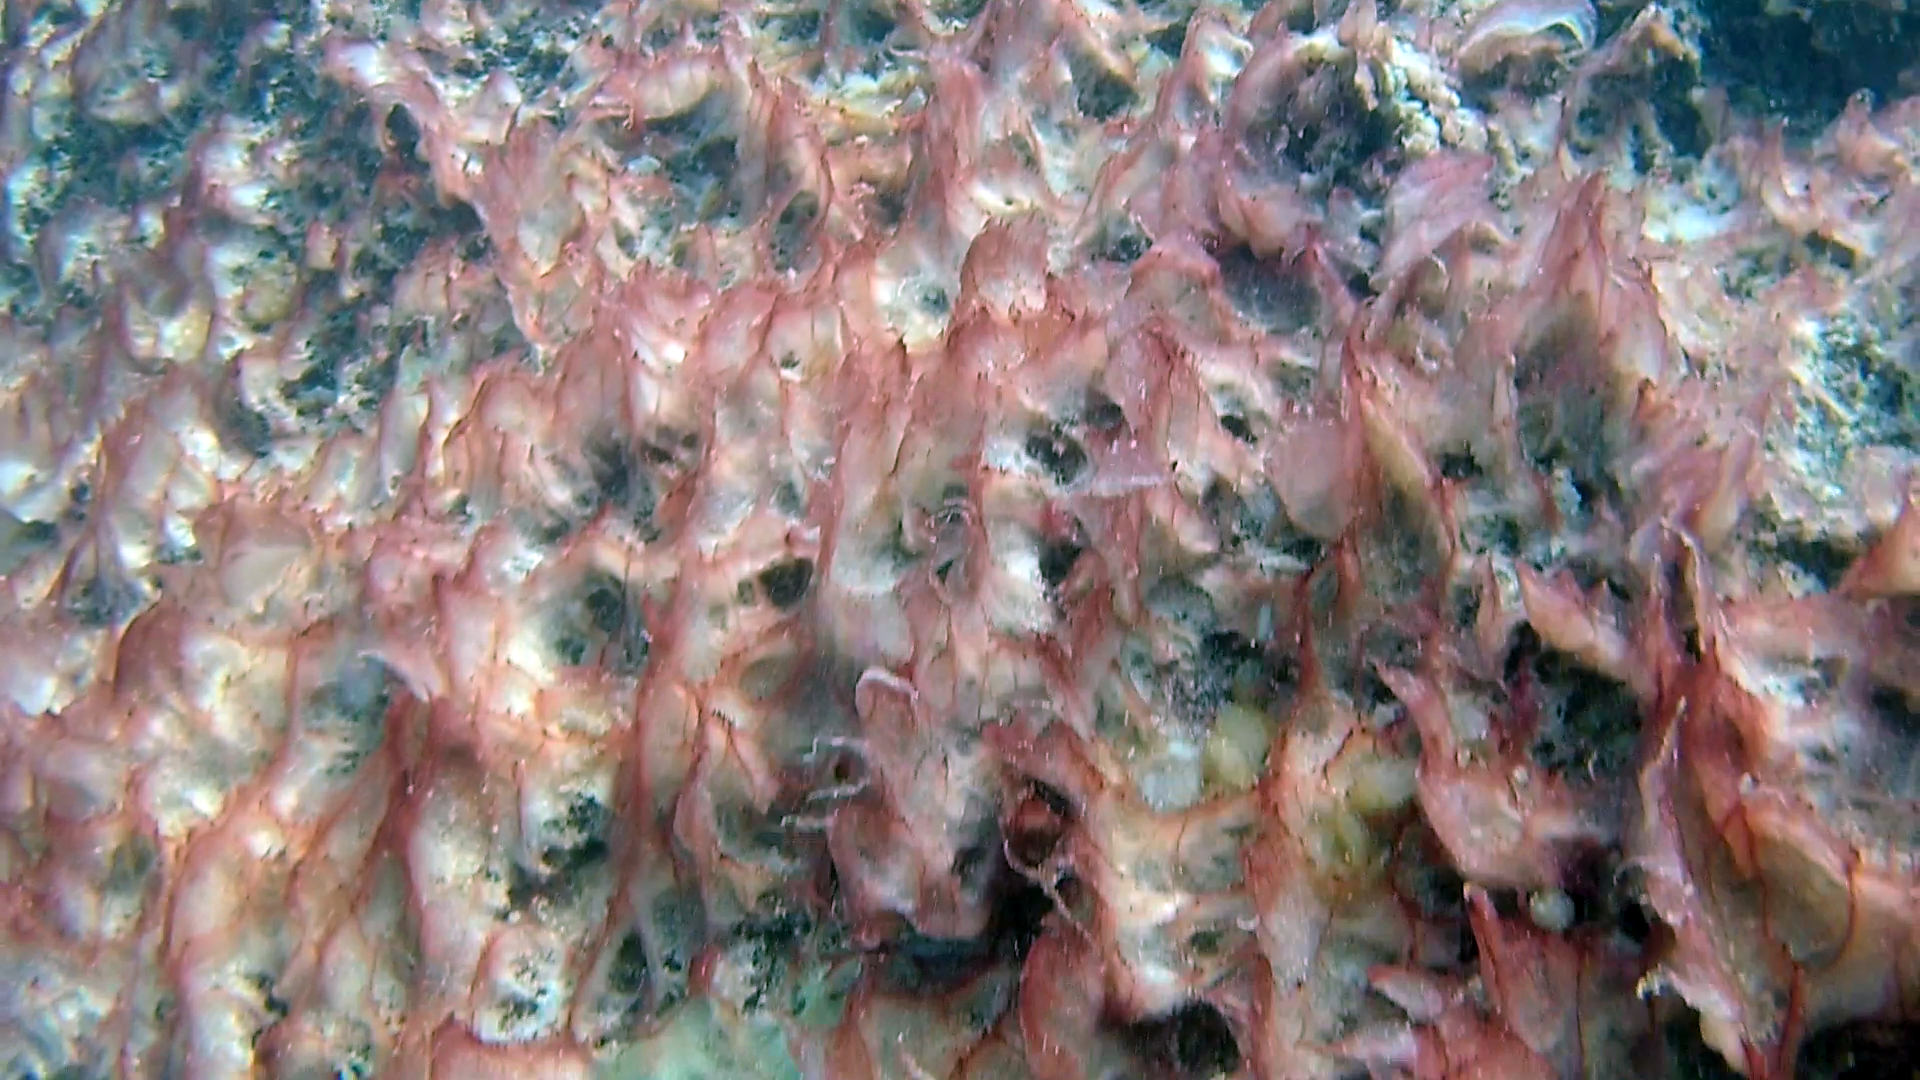 Mucillagine causata da riscaldamento marino -Mucilage caused by marine heating - intotheblue.it